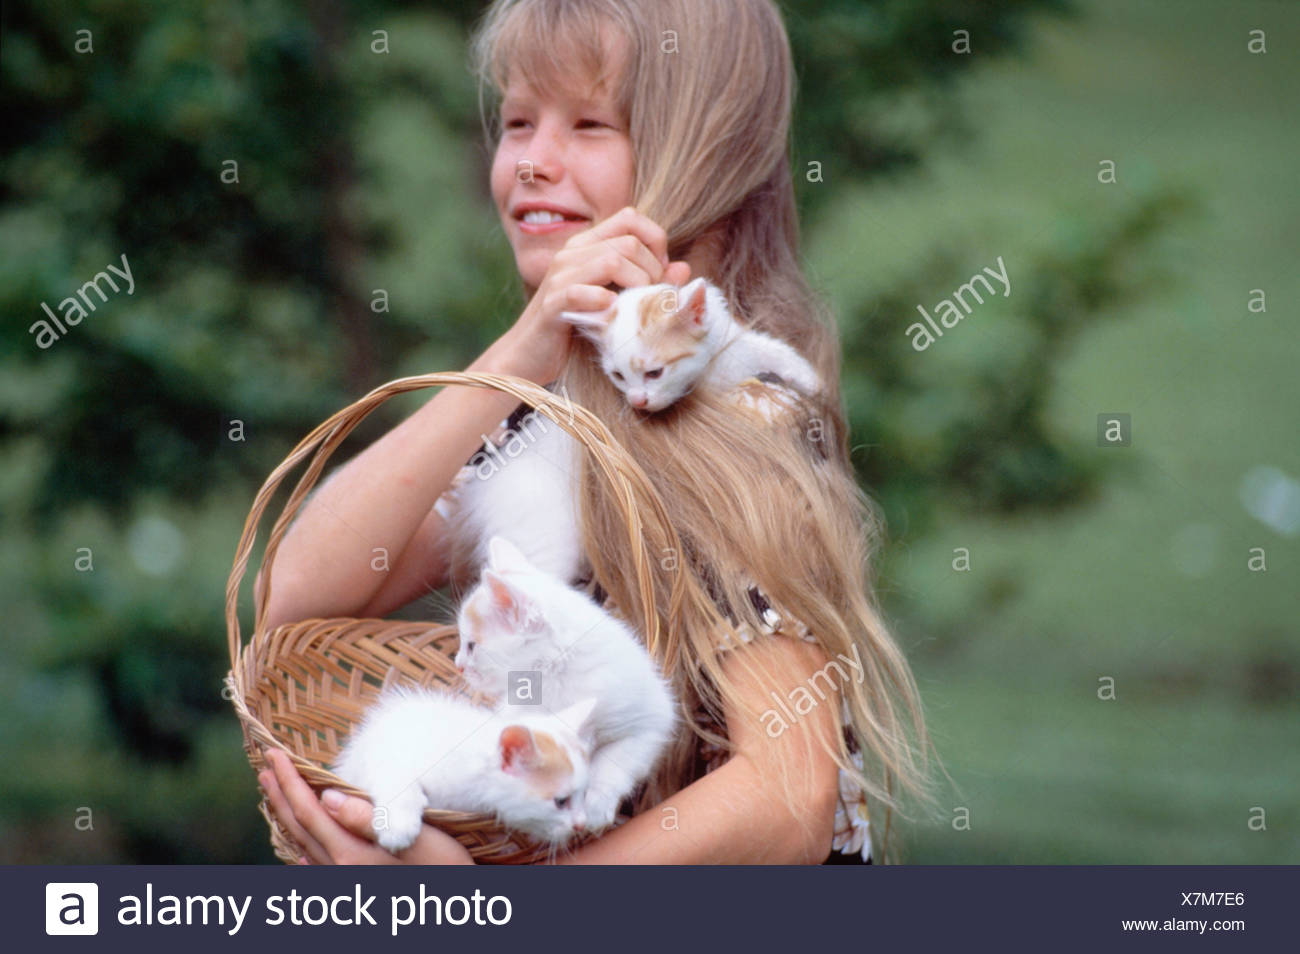 kittens and children